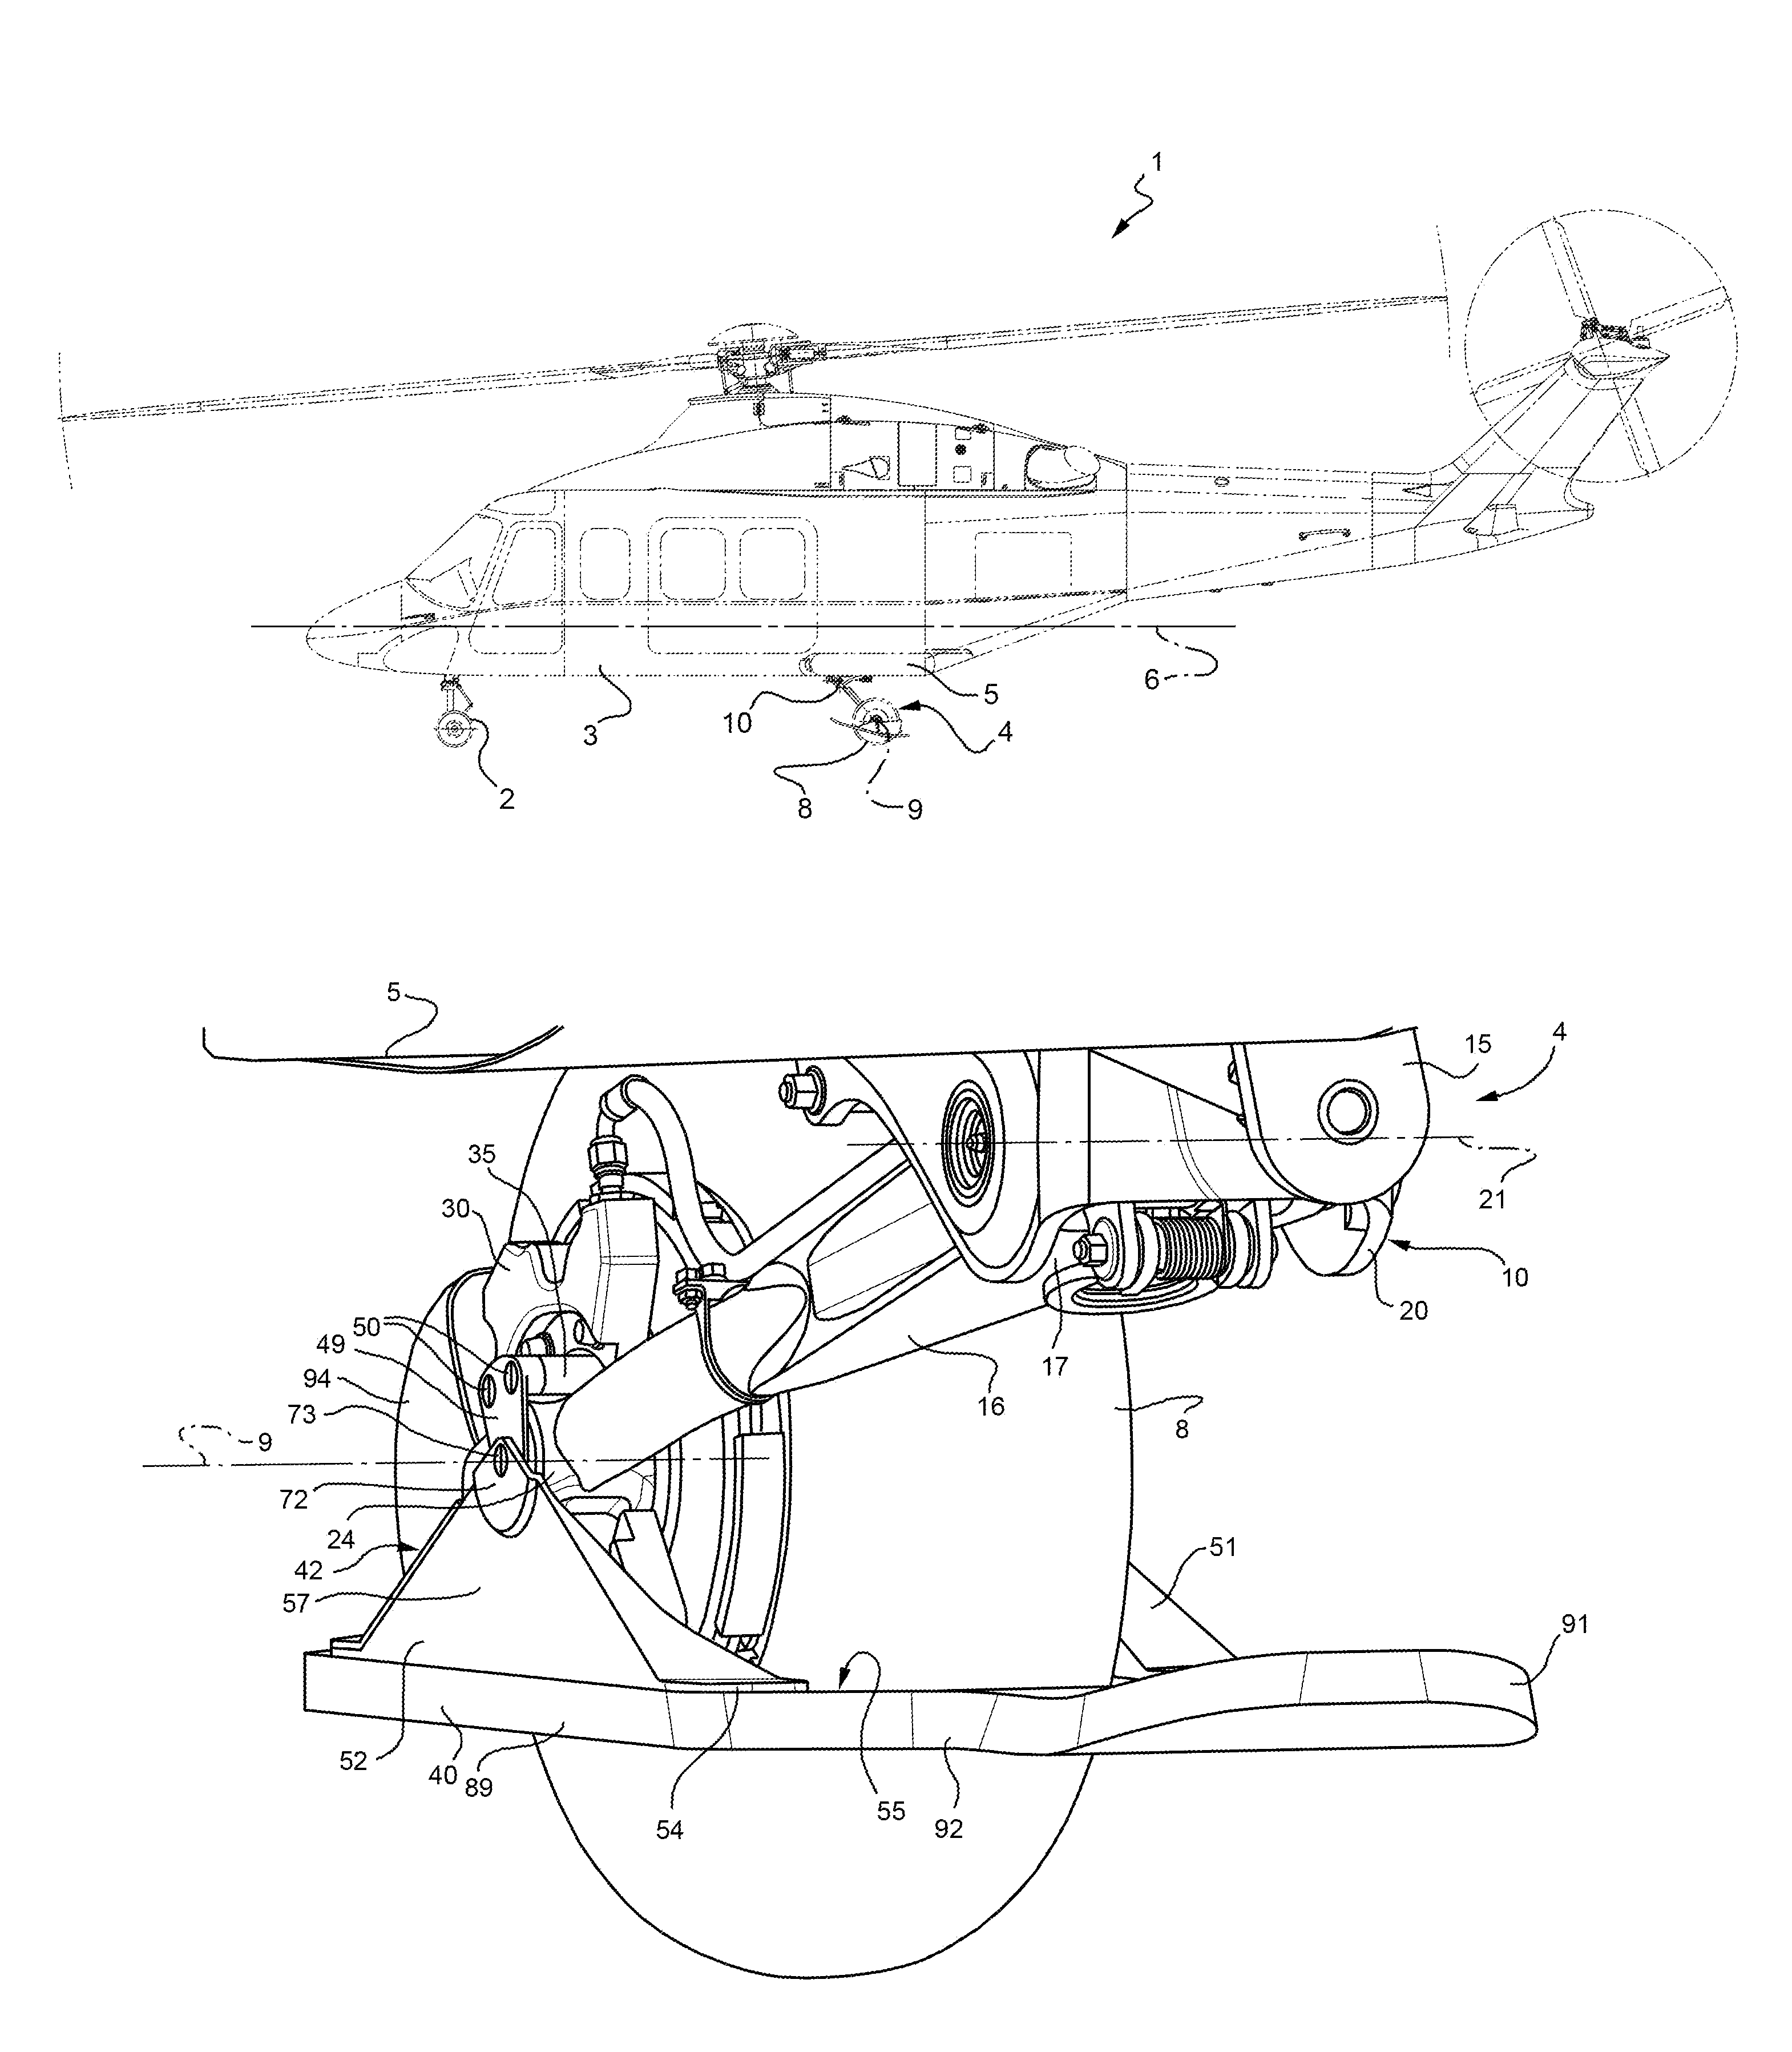 Retractable helicopter landing gear